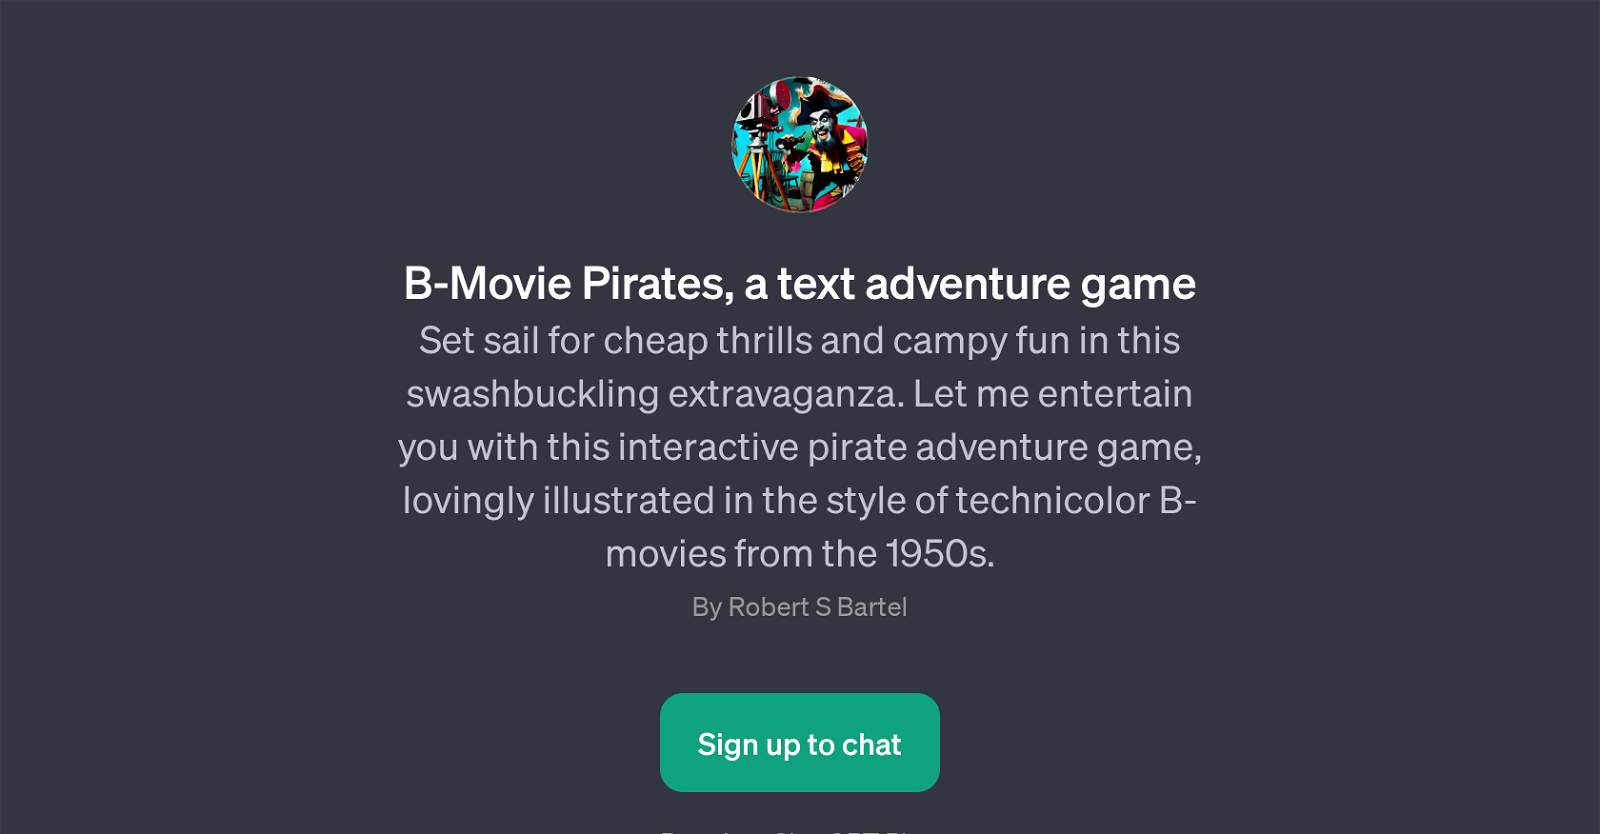 B-Movie Pirates website